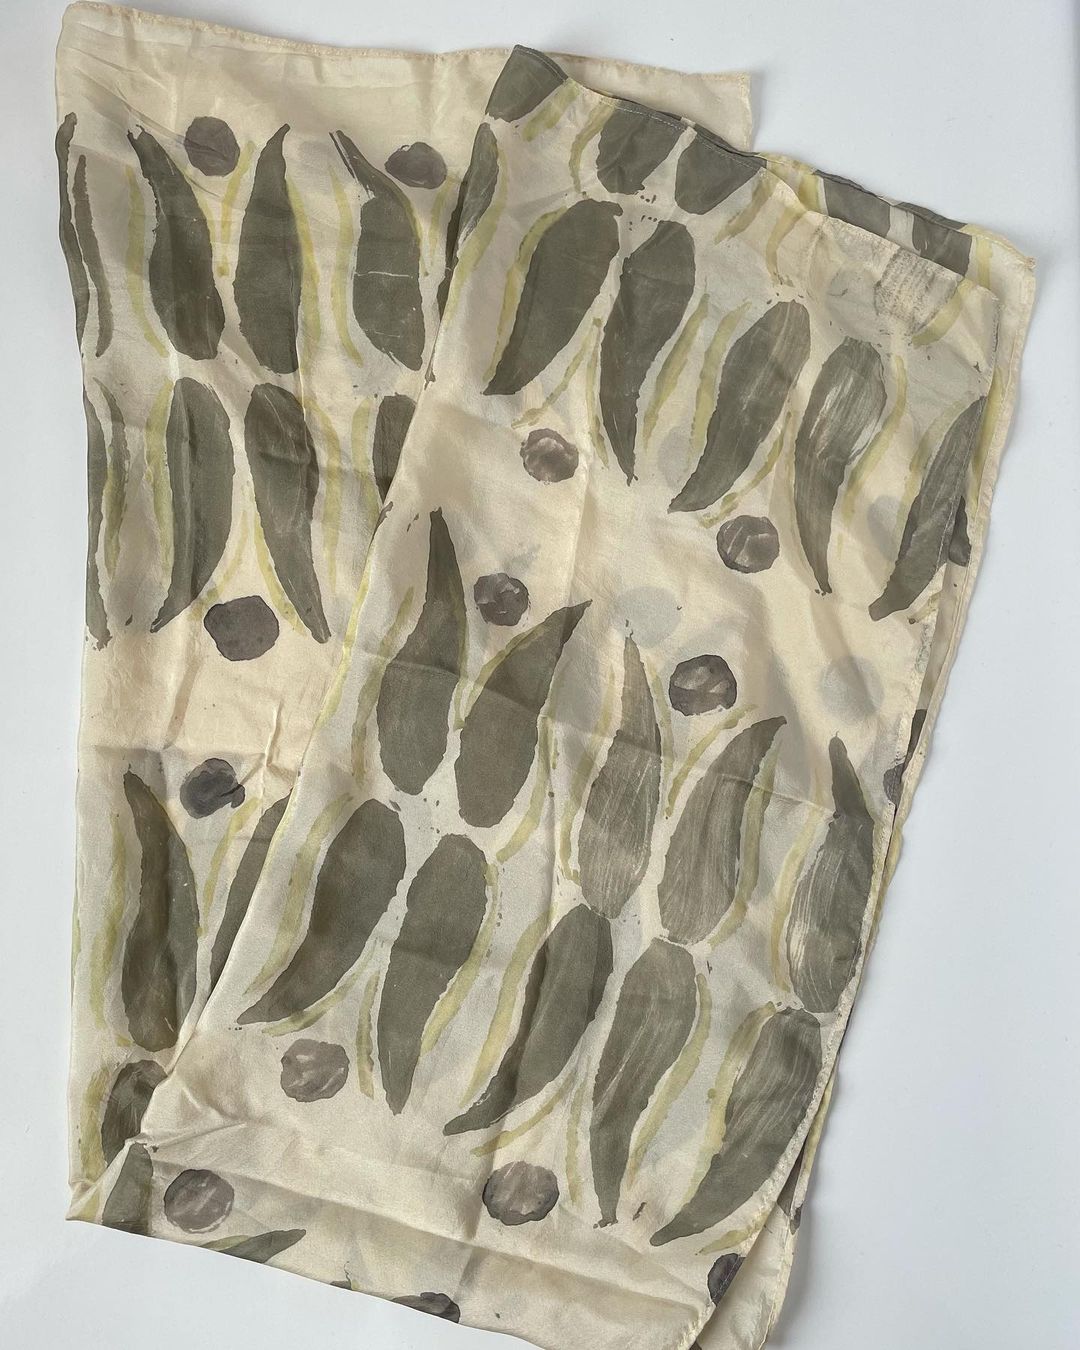 Lotus Queen Hand-printed silk scarf by Yasmine Wasfy